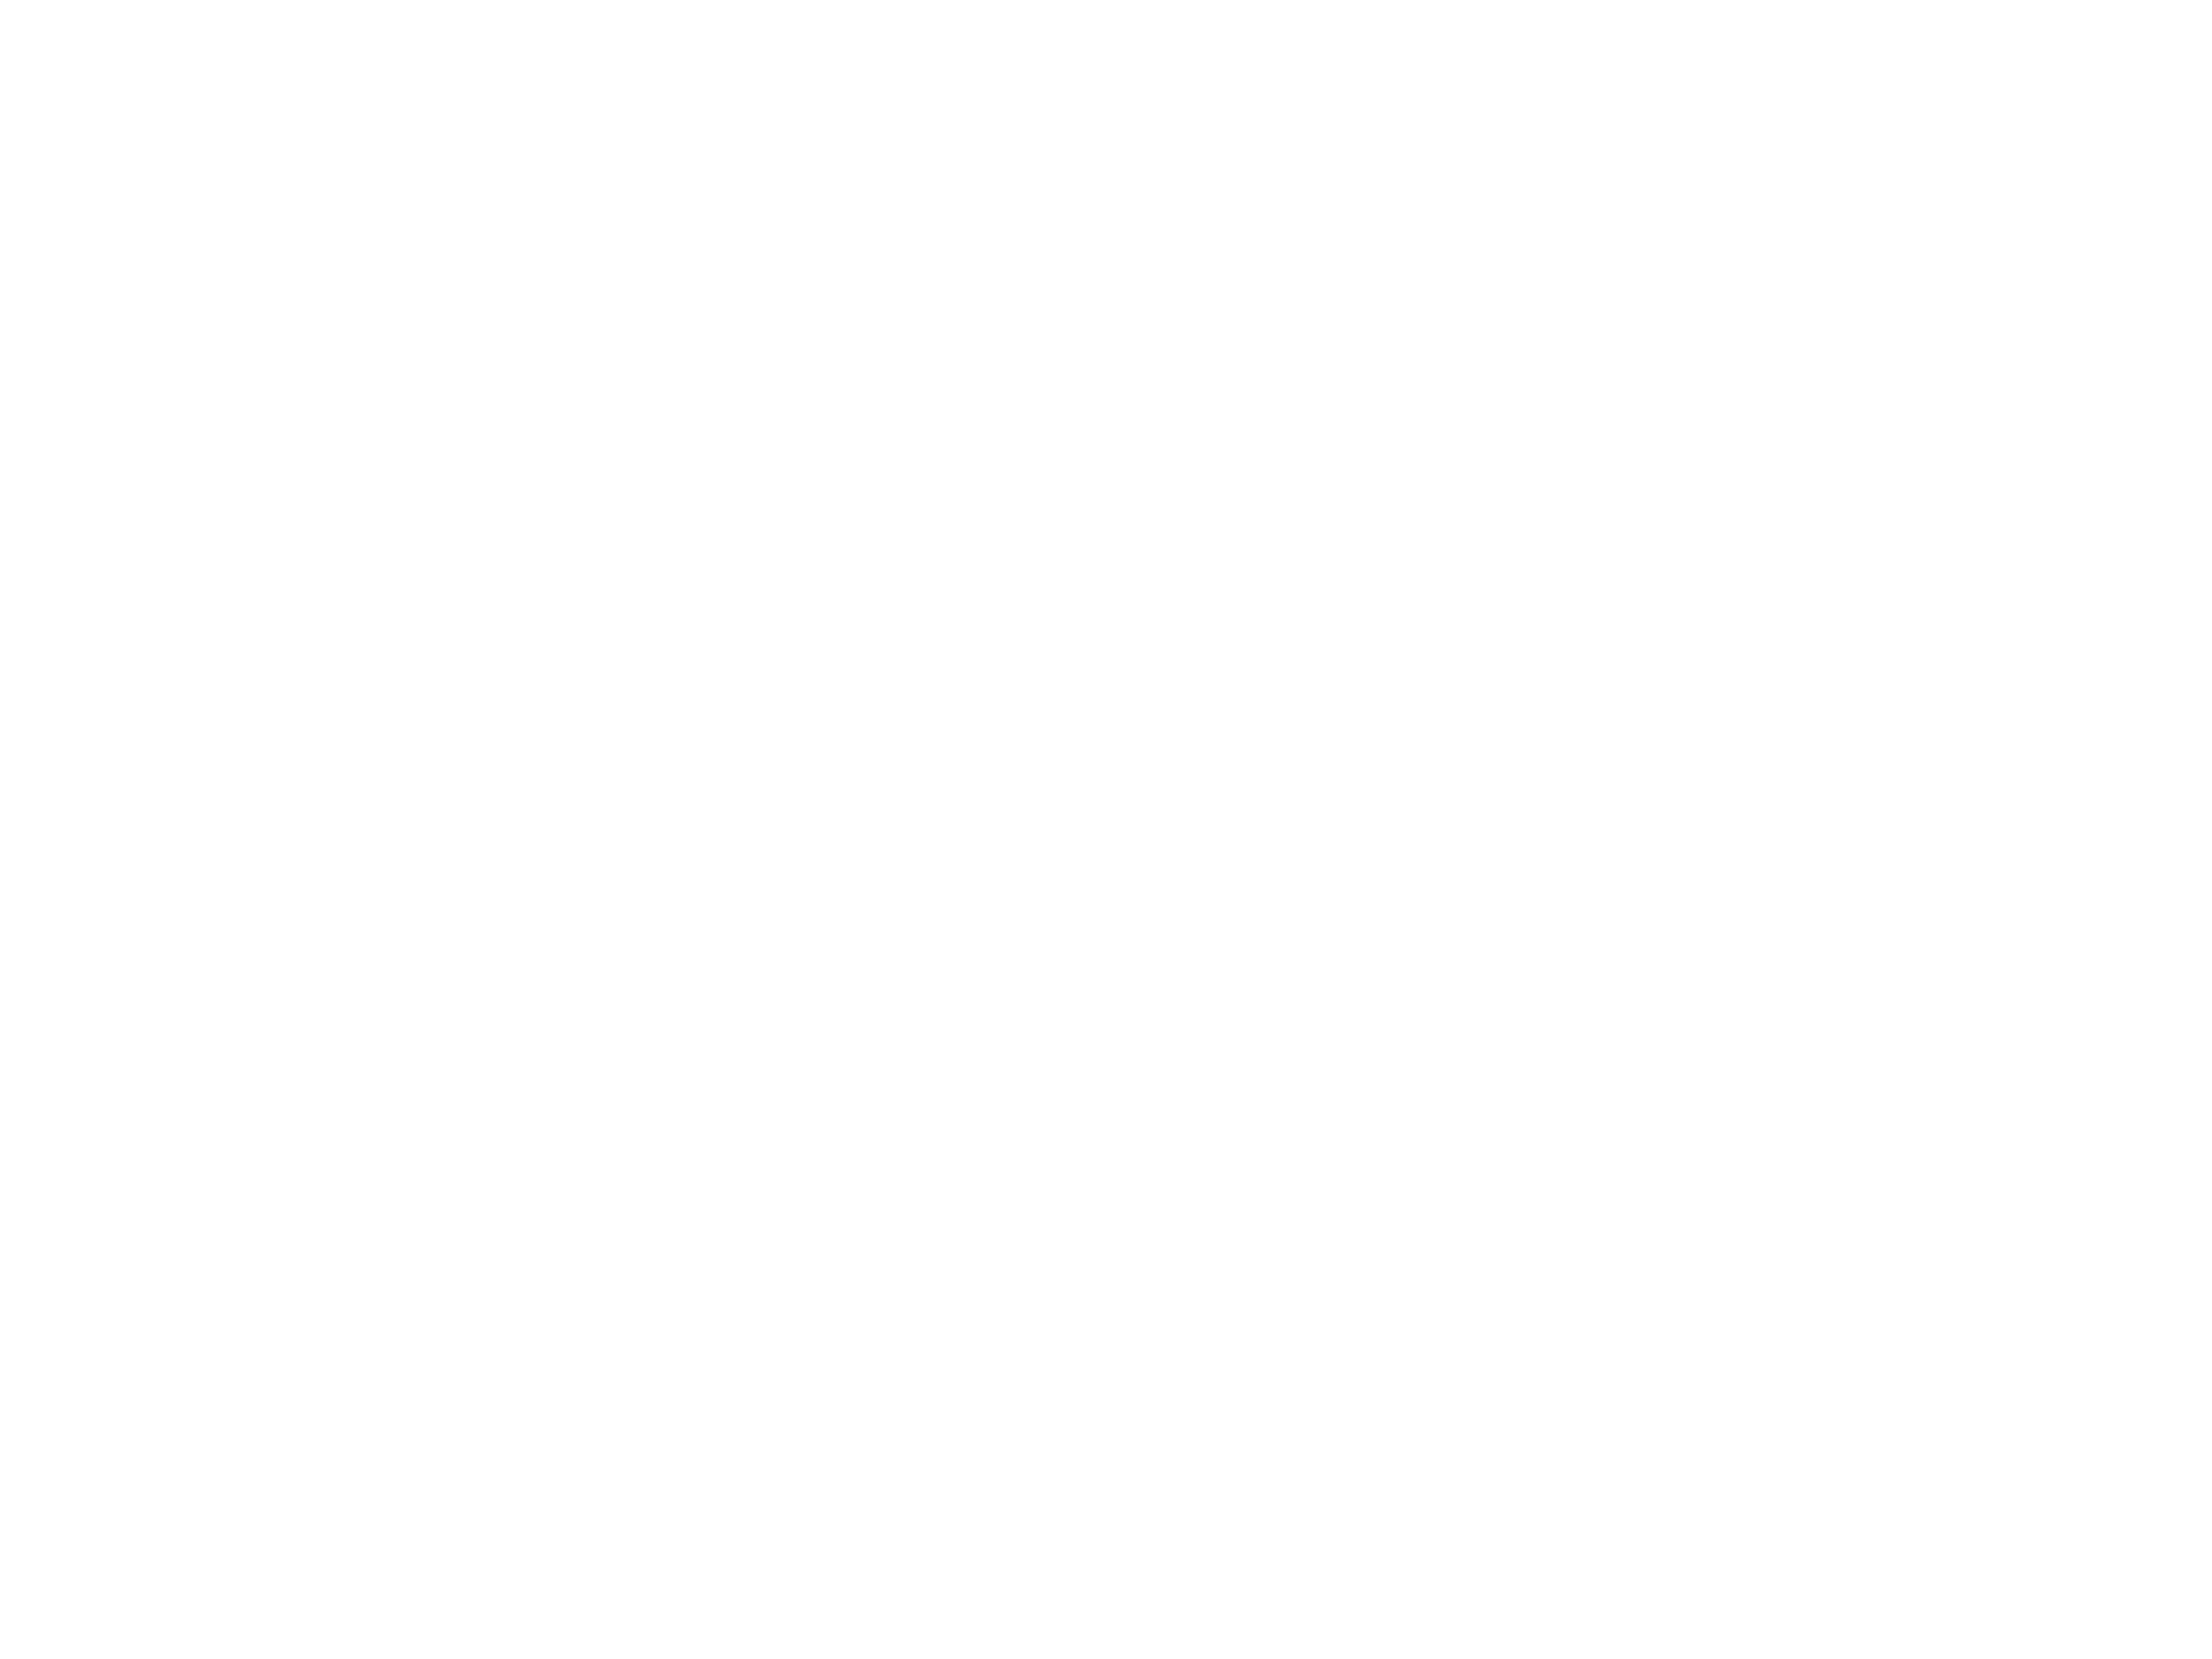 ZSA MUSIC